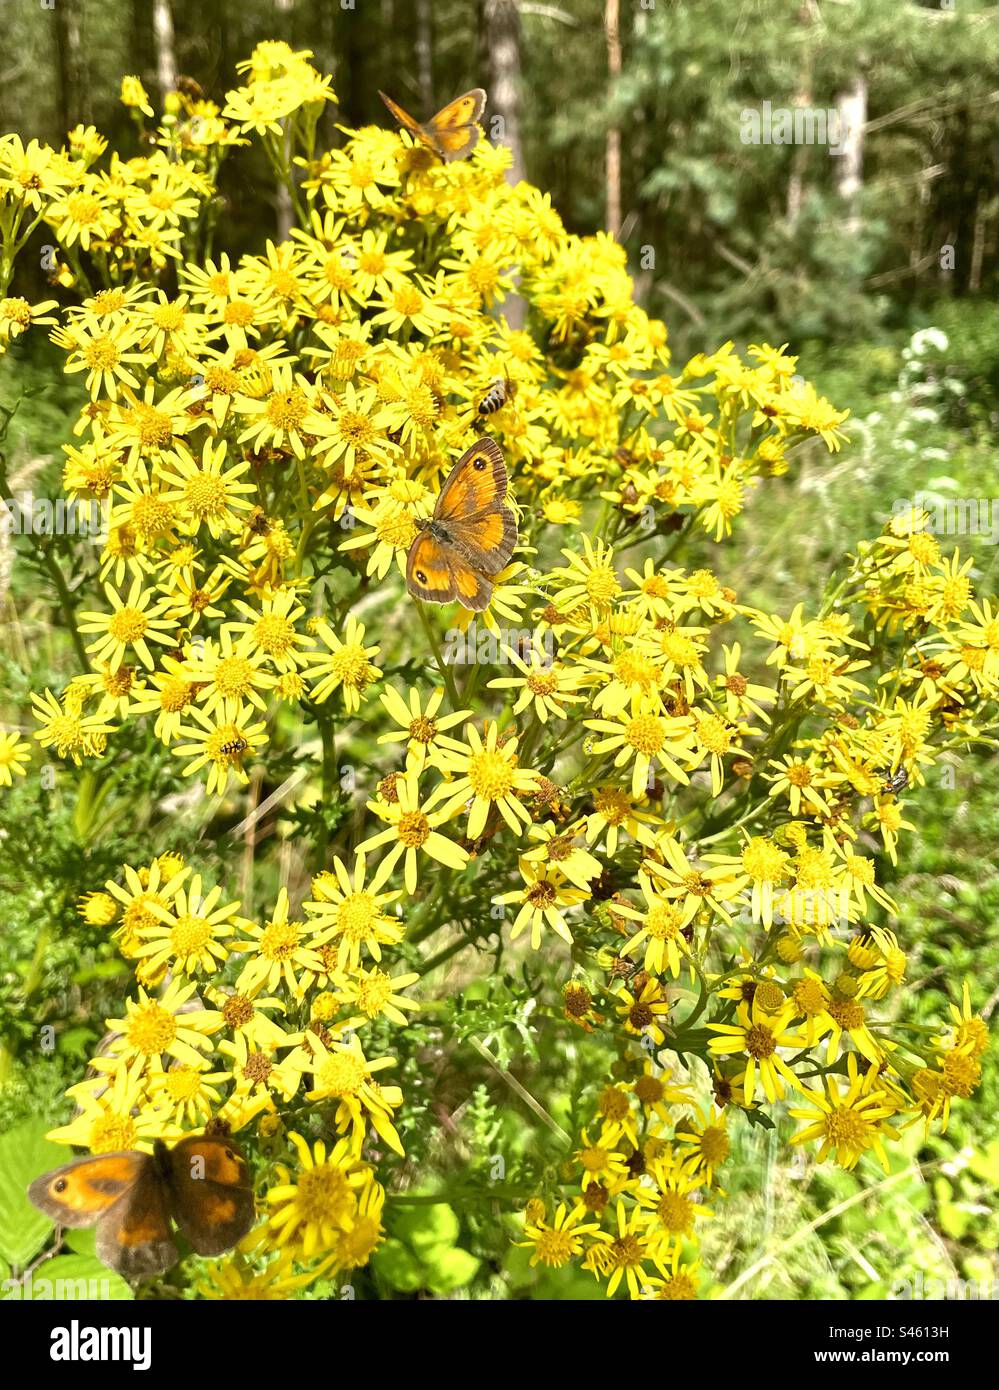 Gatekeeper butterflies (also known as Hedge Brown) feeding on the nectar of the bright yellow flowers of the Jacobaea vulgaris or Senecio jacobaea plant. Stock Photo